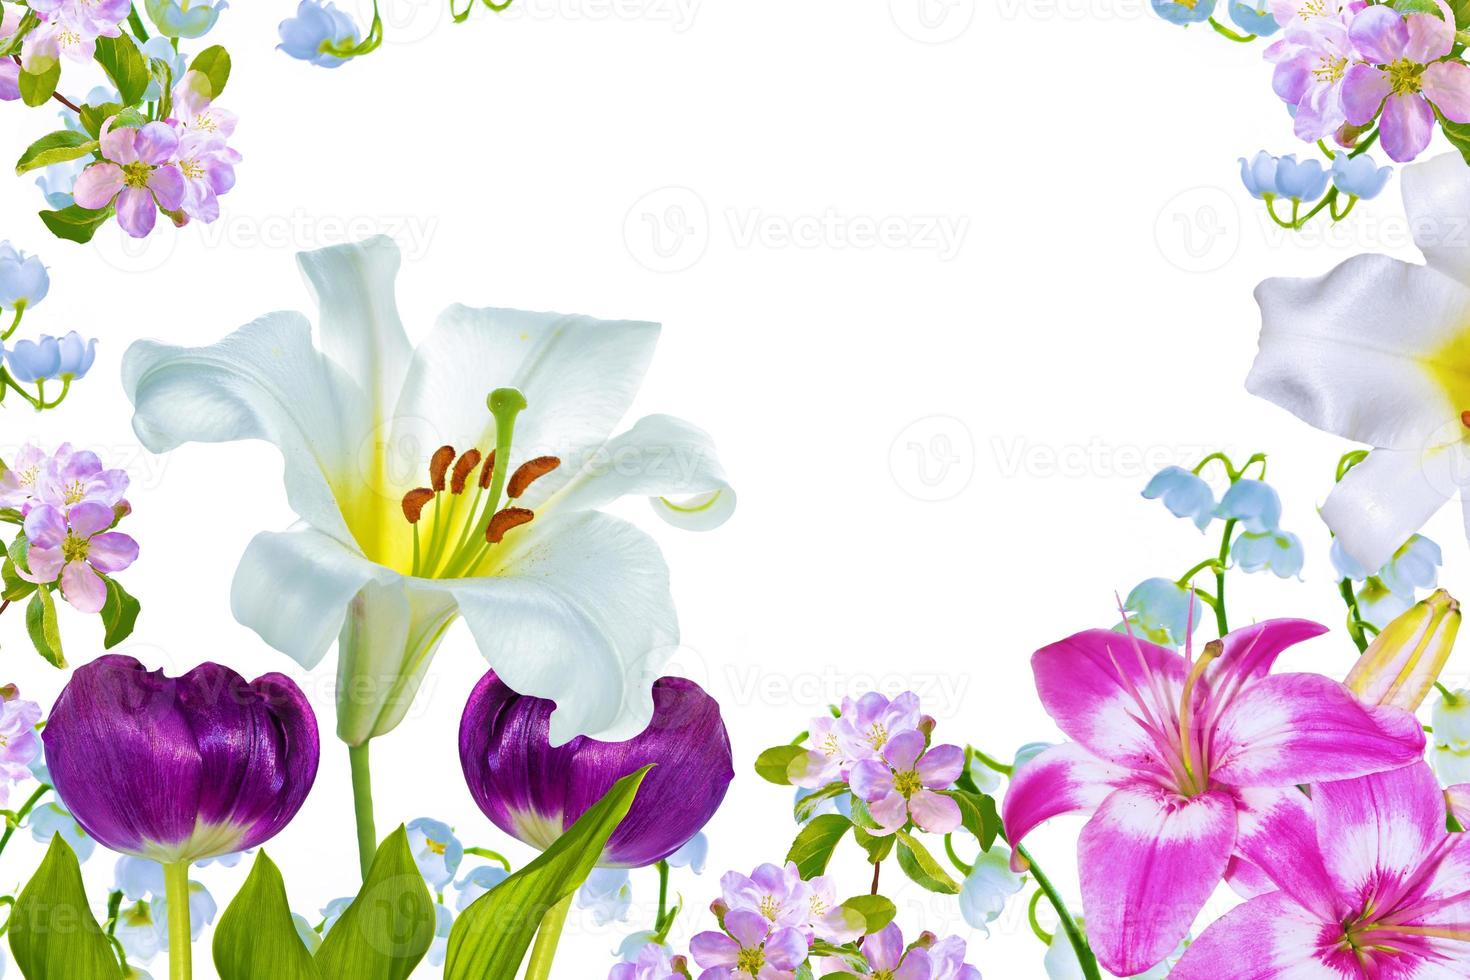 liljor. liljekonvalj blomma på vit bakgrund. foto